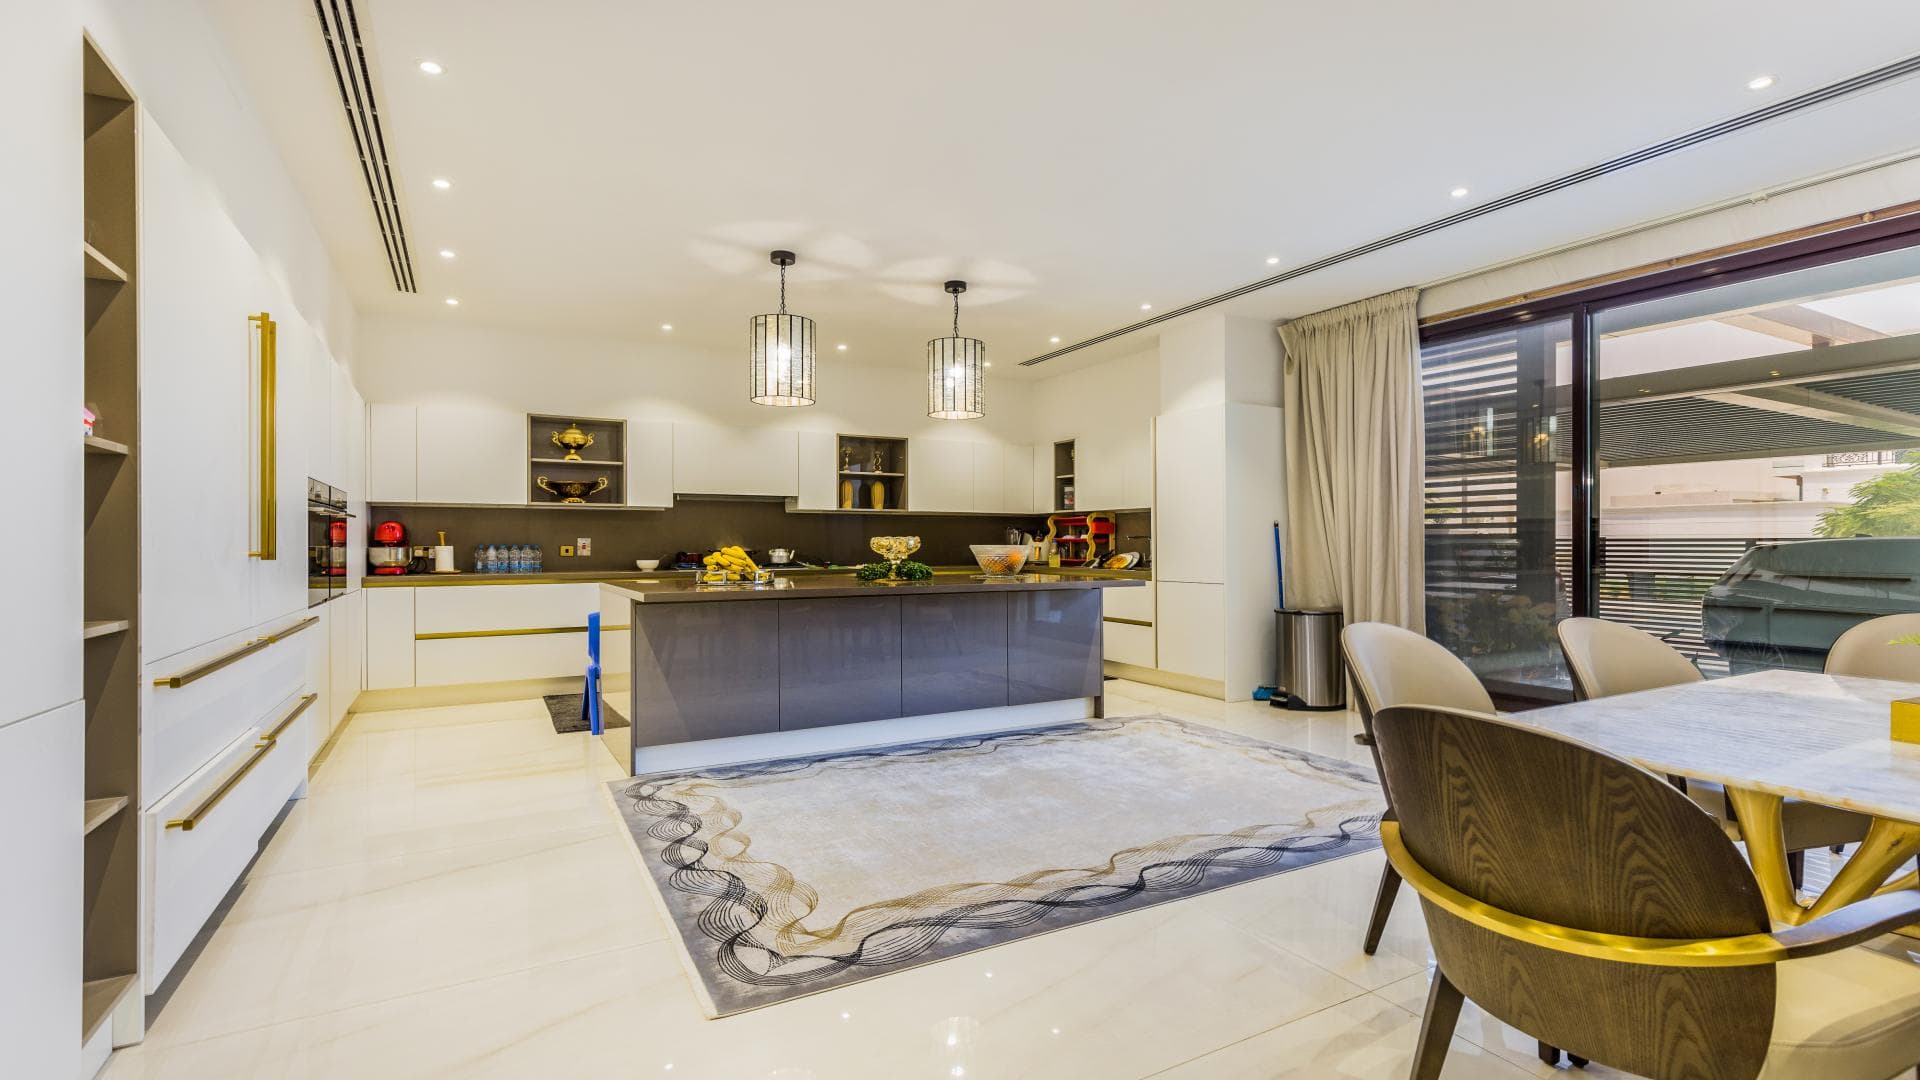 6 Bedroom Villa For Sale Dubai Hills Lp19372 1c7d110698c7e700.jpg